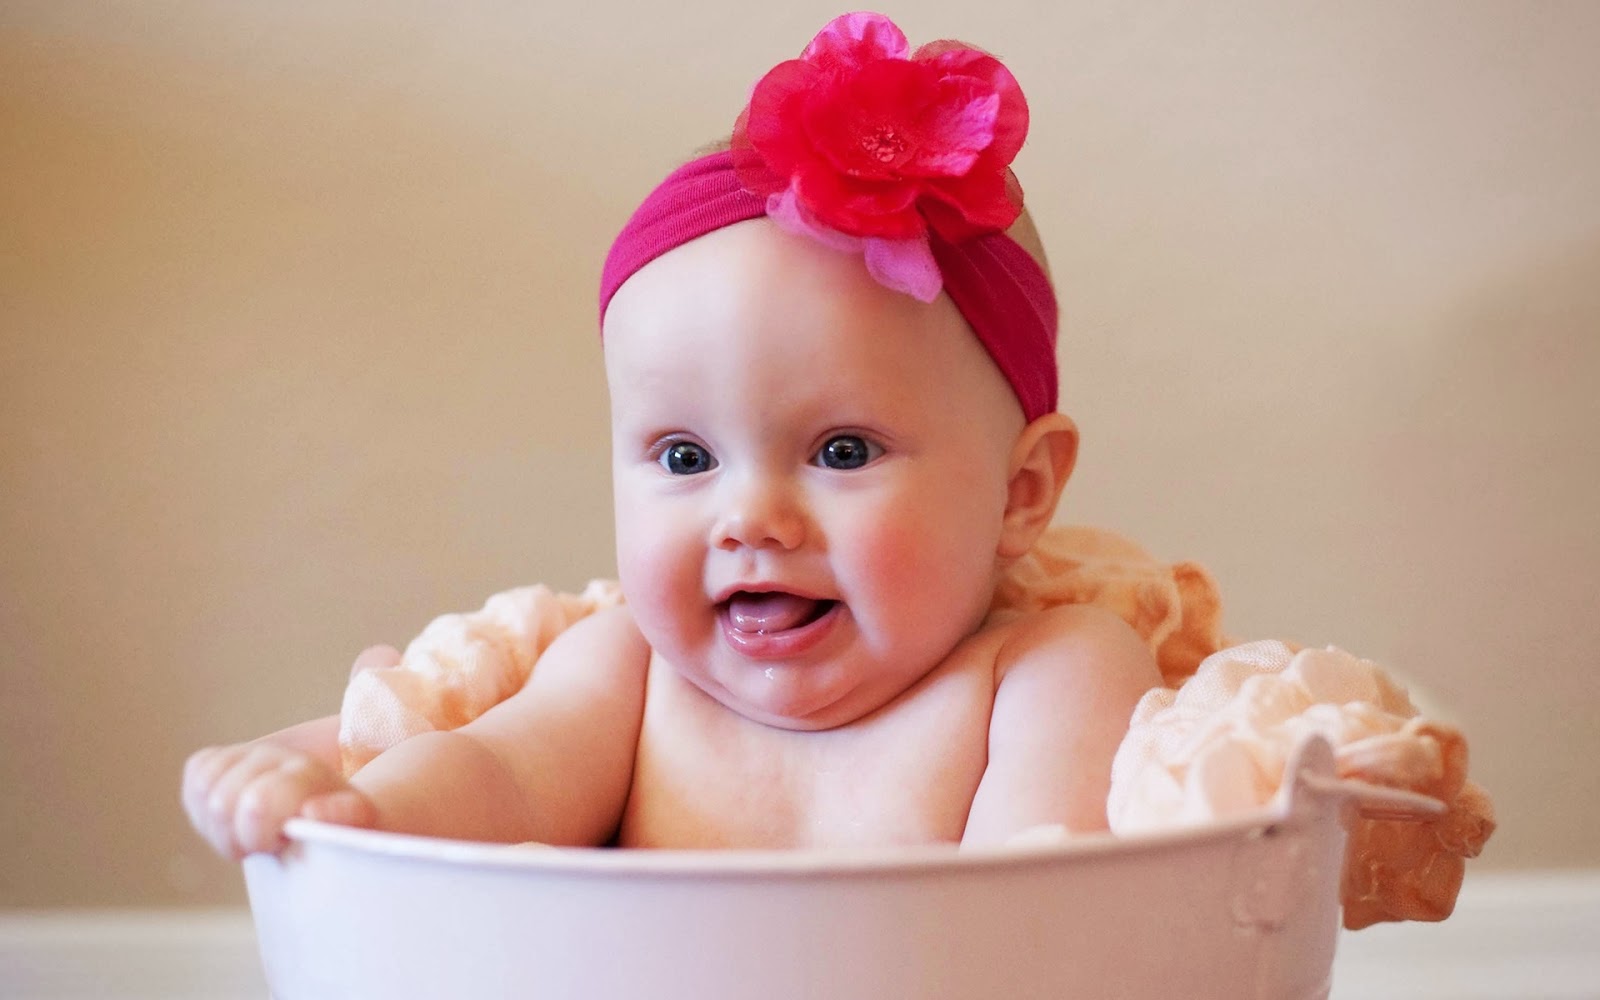 Image of a cute newborn baby girl